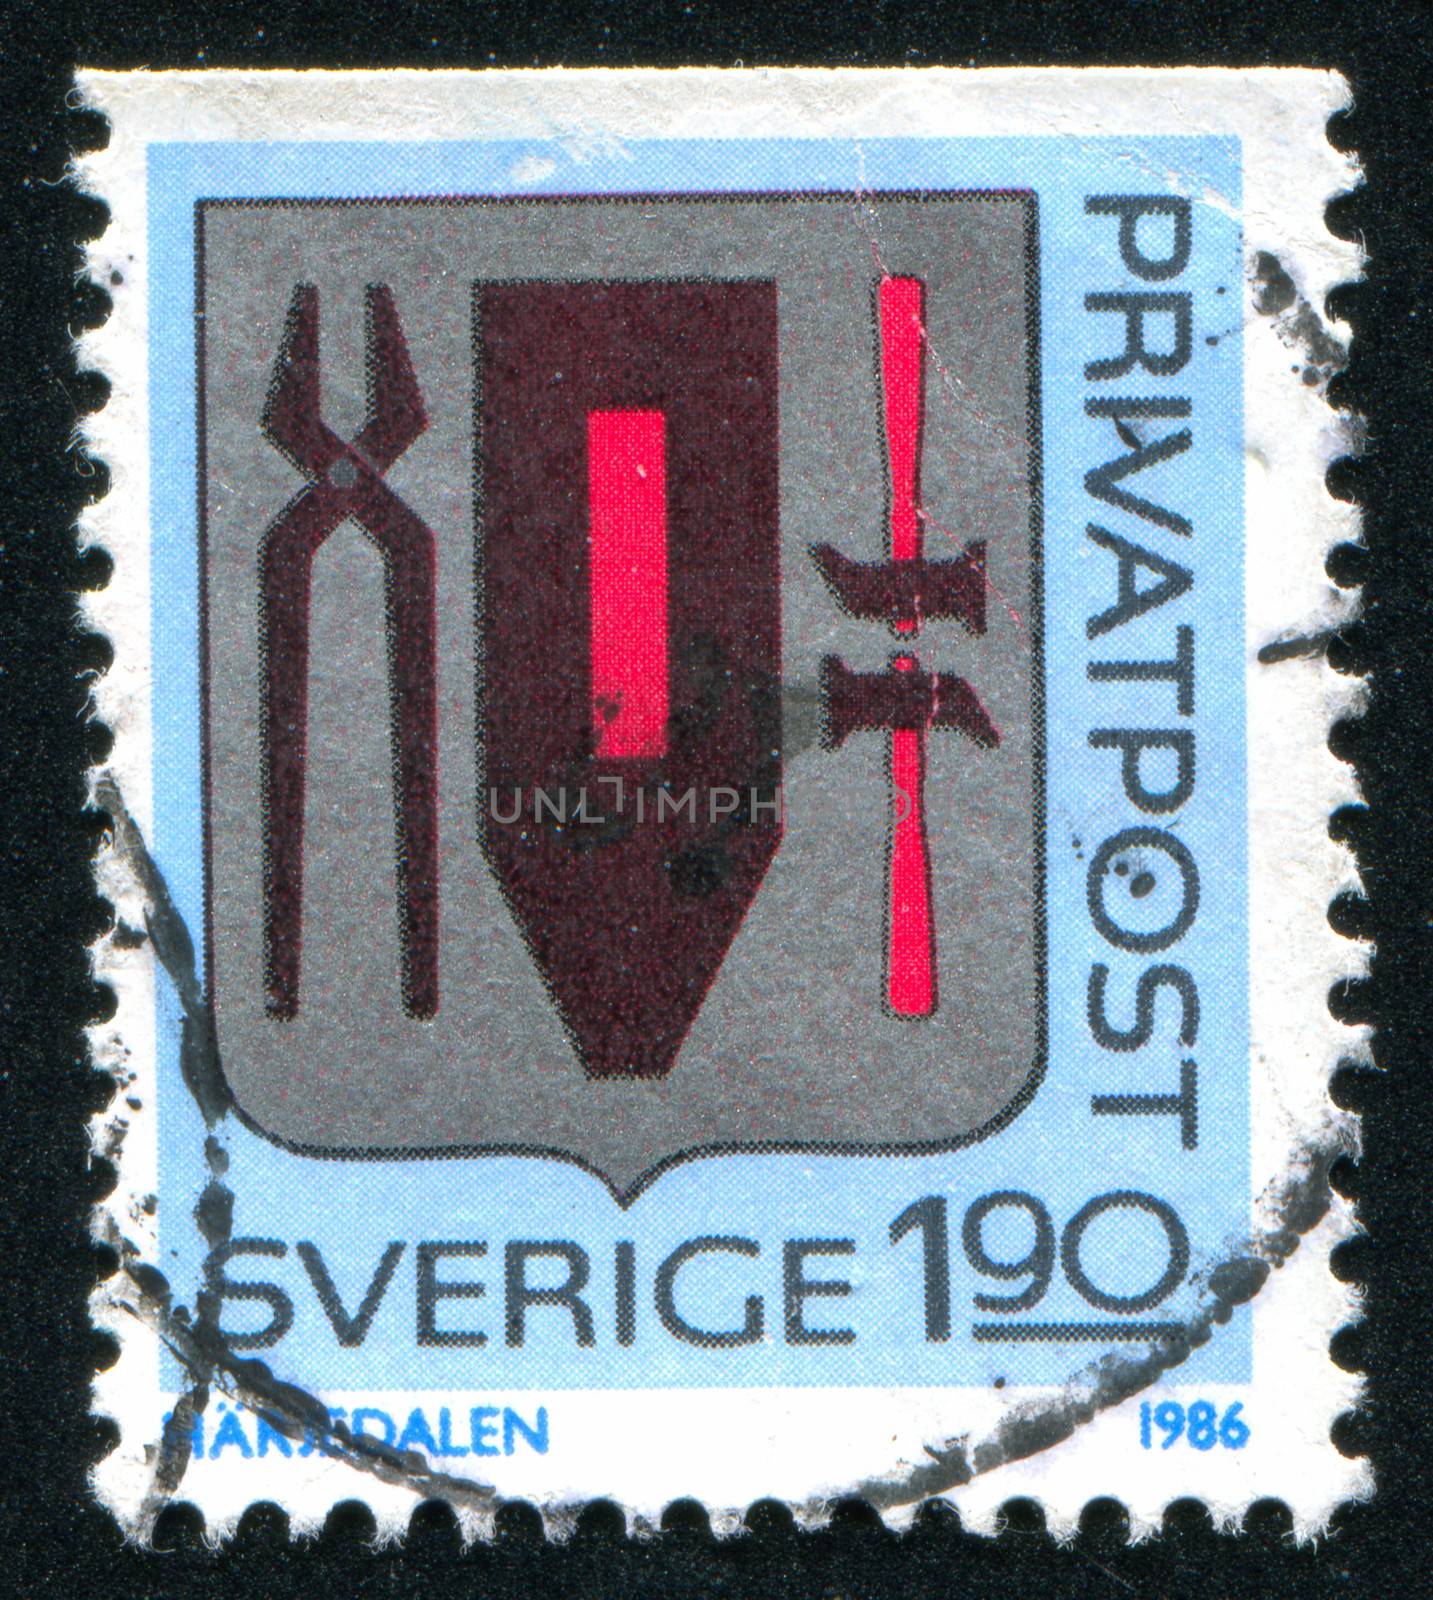 SWEDEN - CIRCA 1986: stamp printed by Sweden, shows Harjedalen Arms, circa 1986